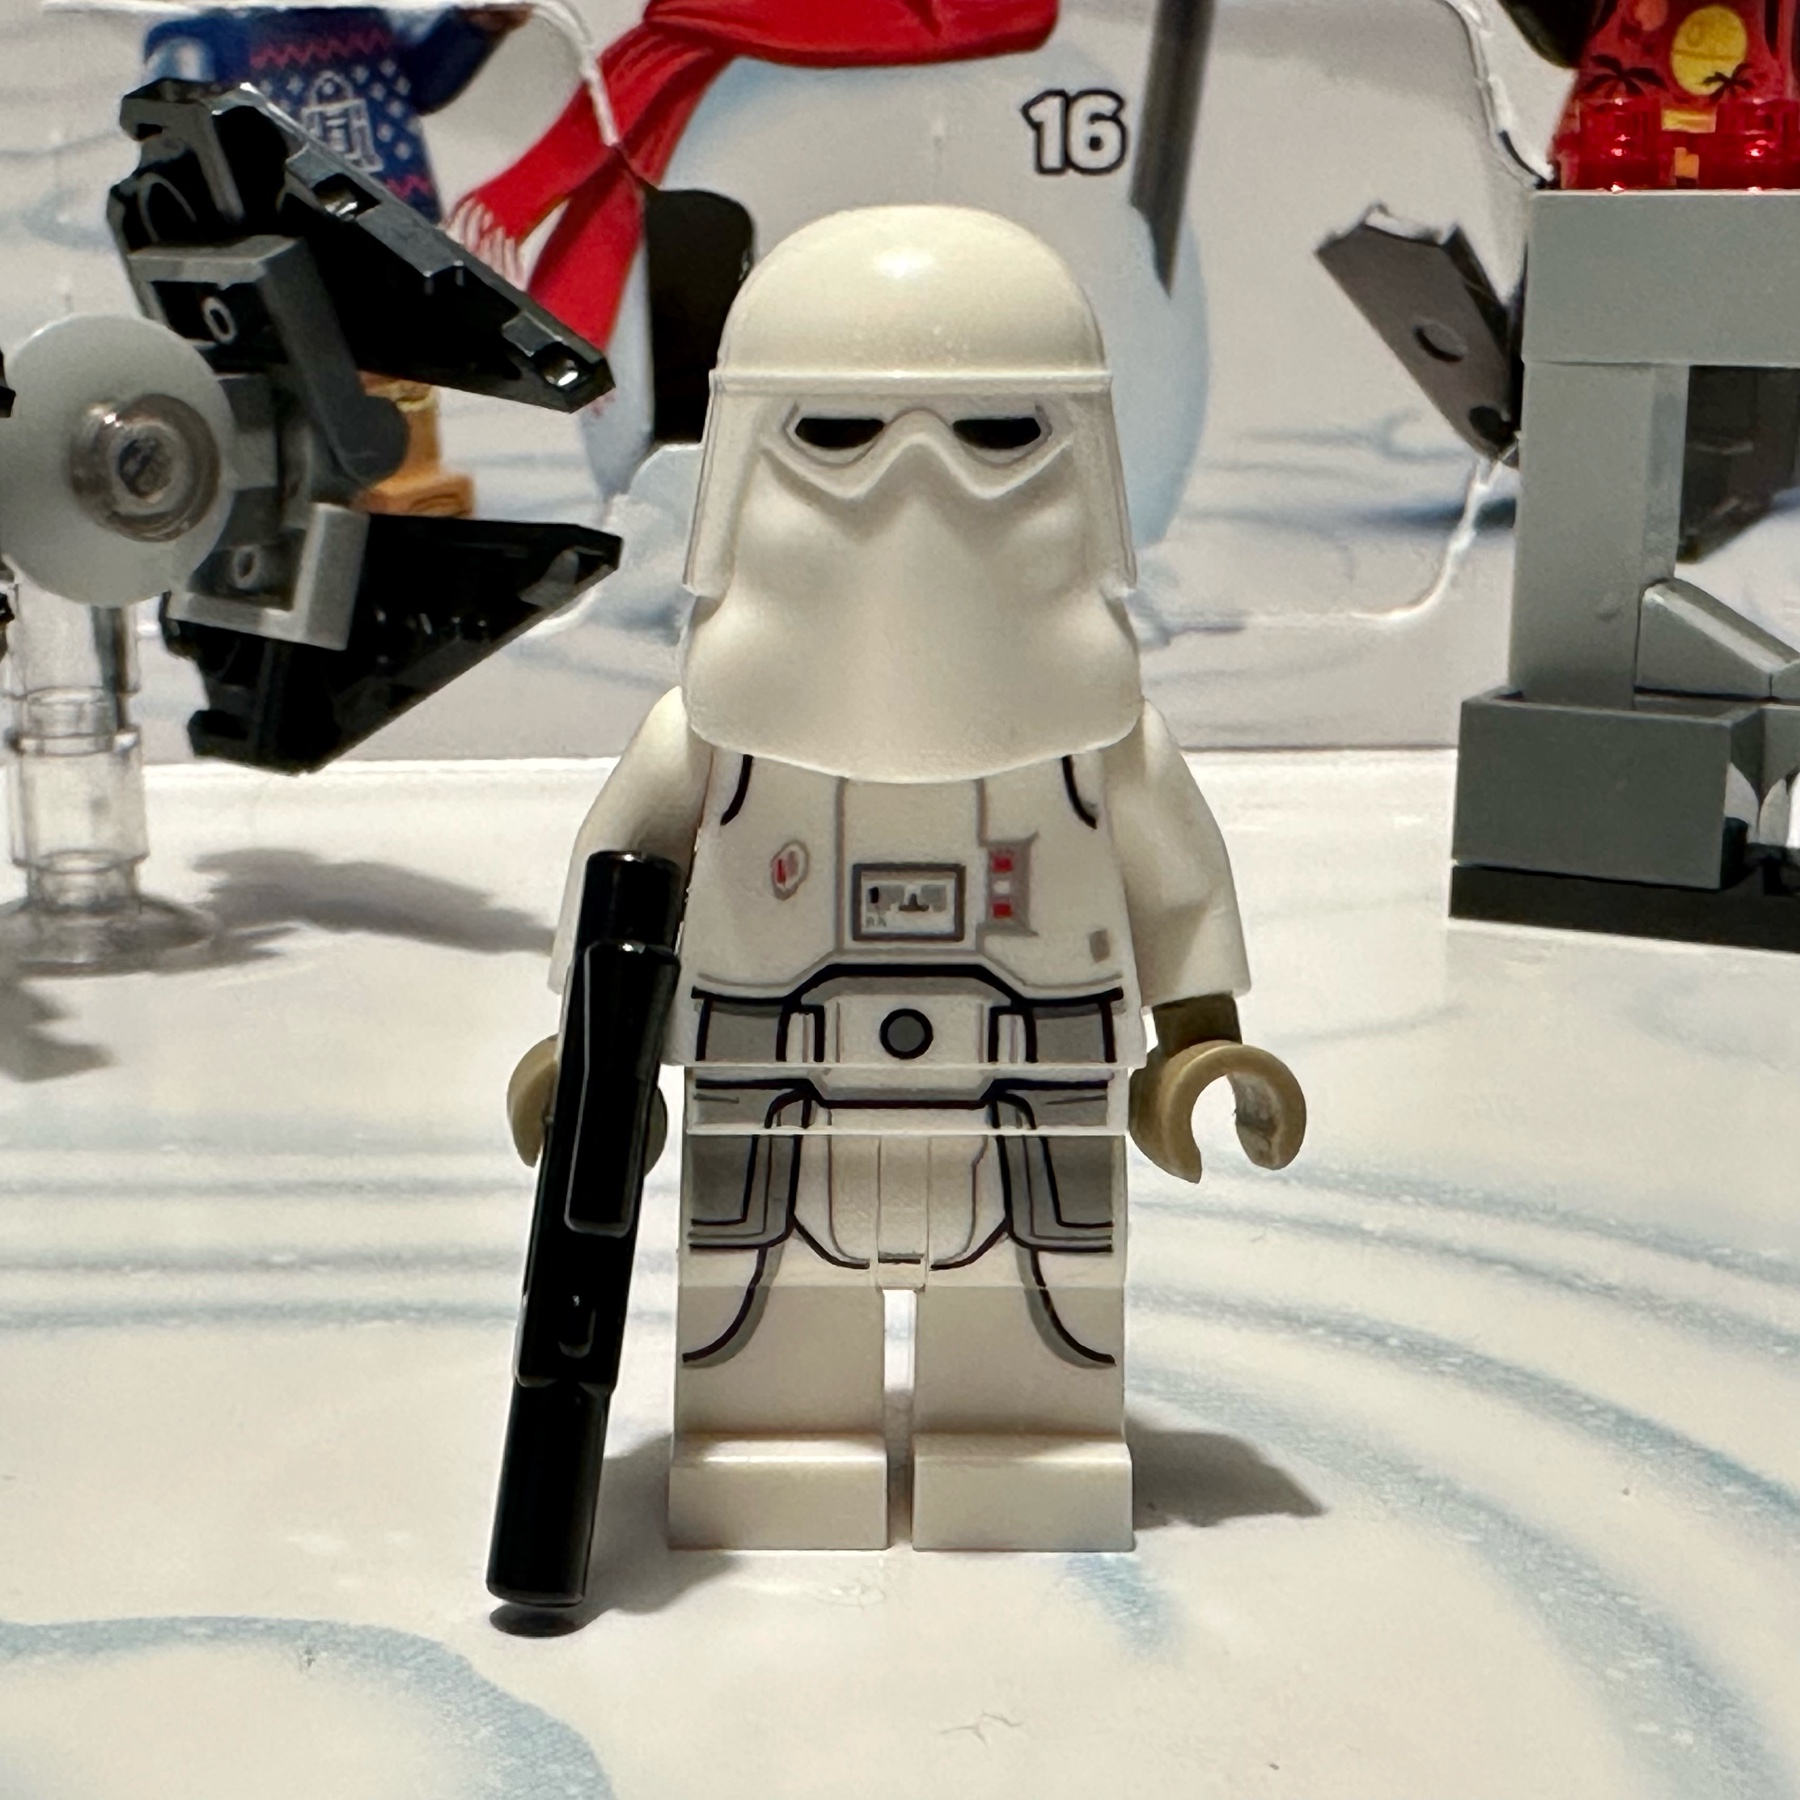 LEGO Snowtrooper minifigure holding a blaster